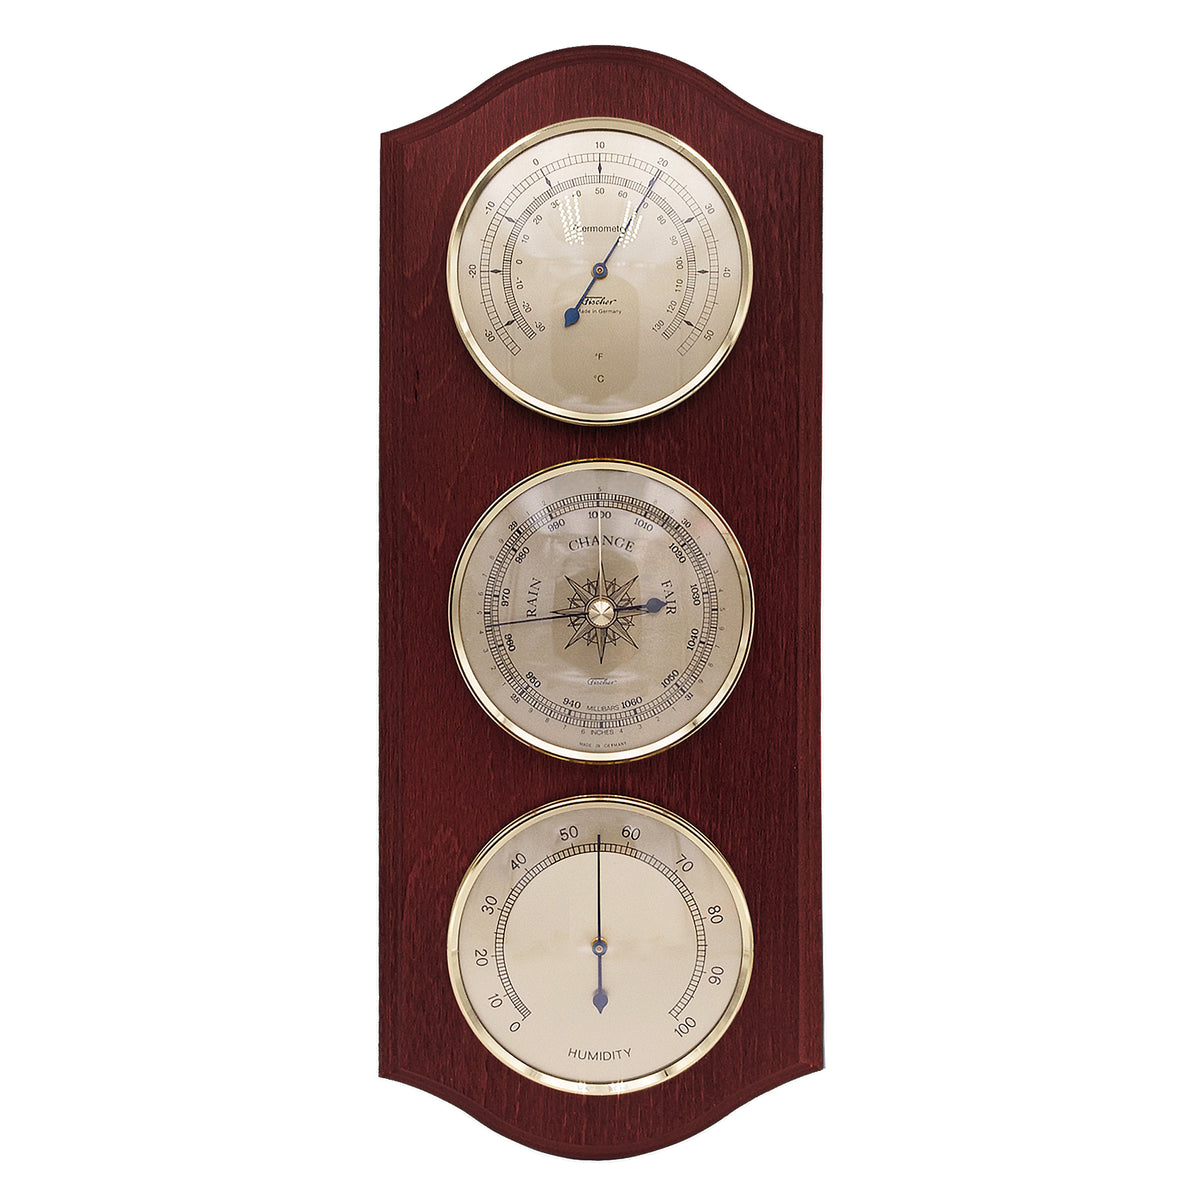 Traditional Barometer Barometer The Home,barometric Pressure  Gauge,barometers Weather Instruments,Weather Station Barometer (Color :  Gold)